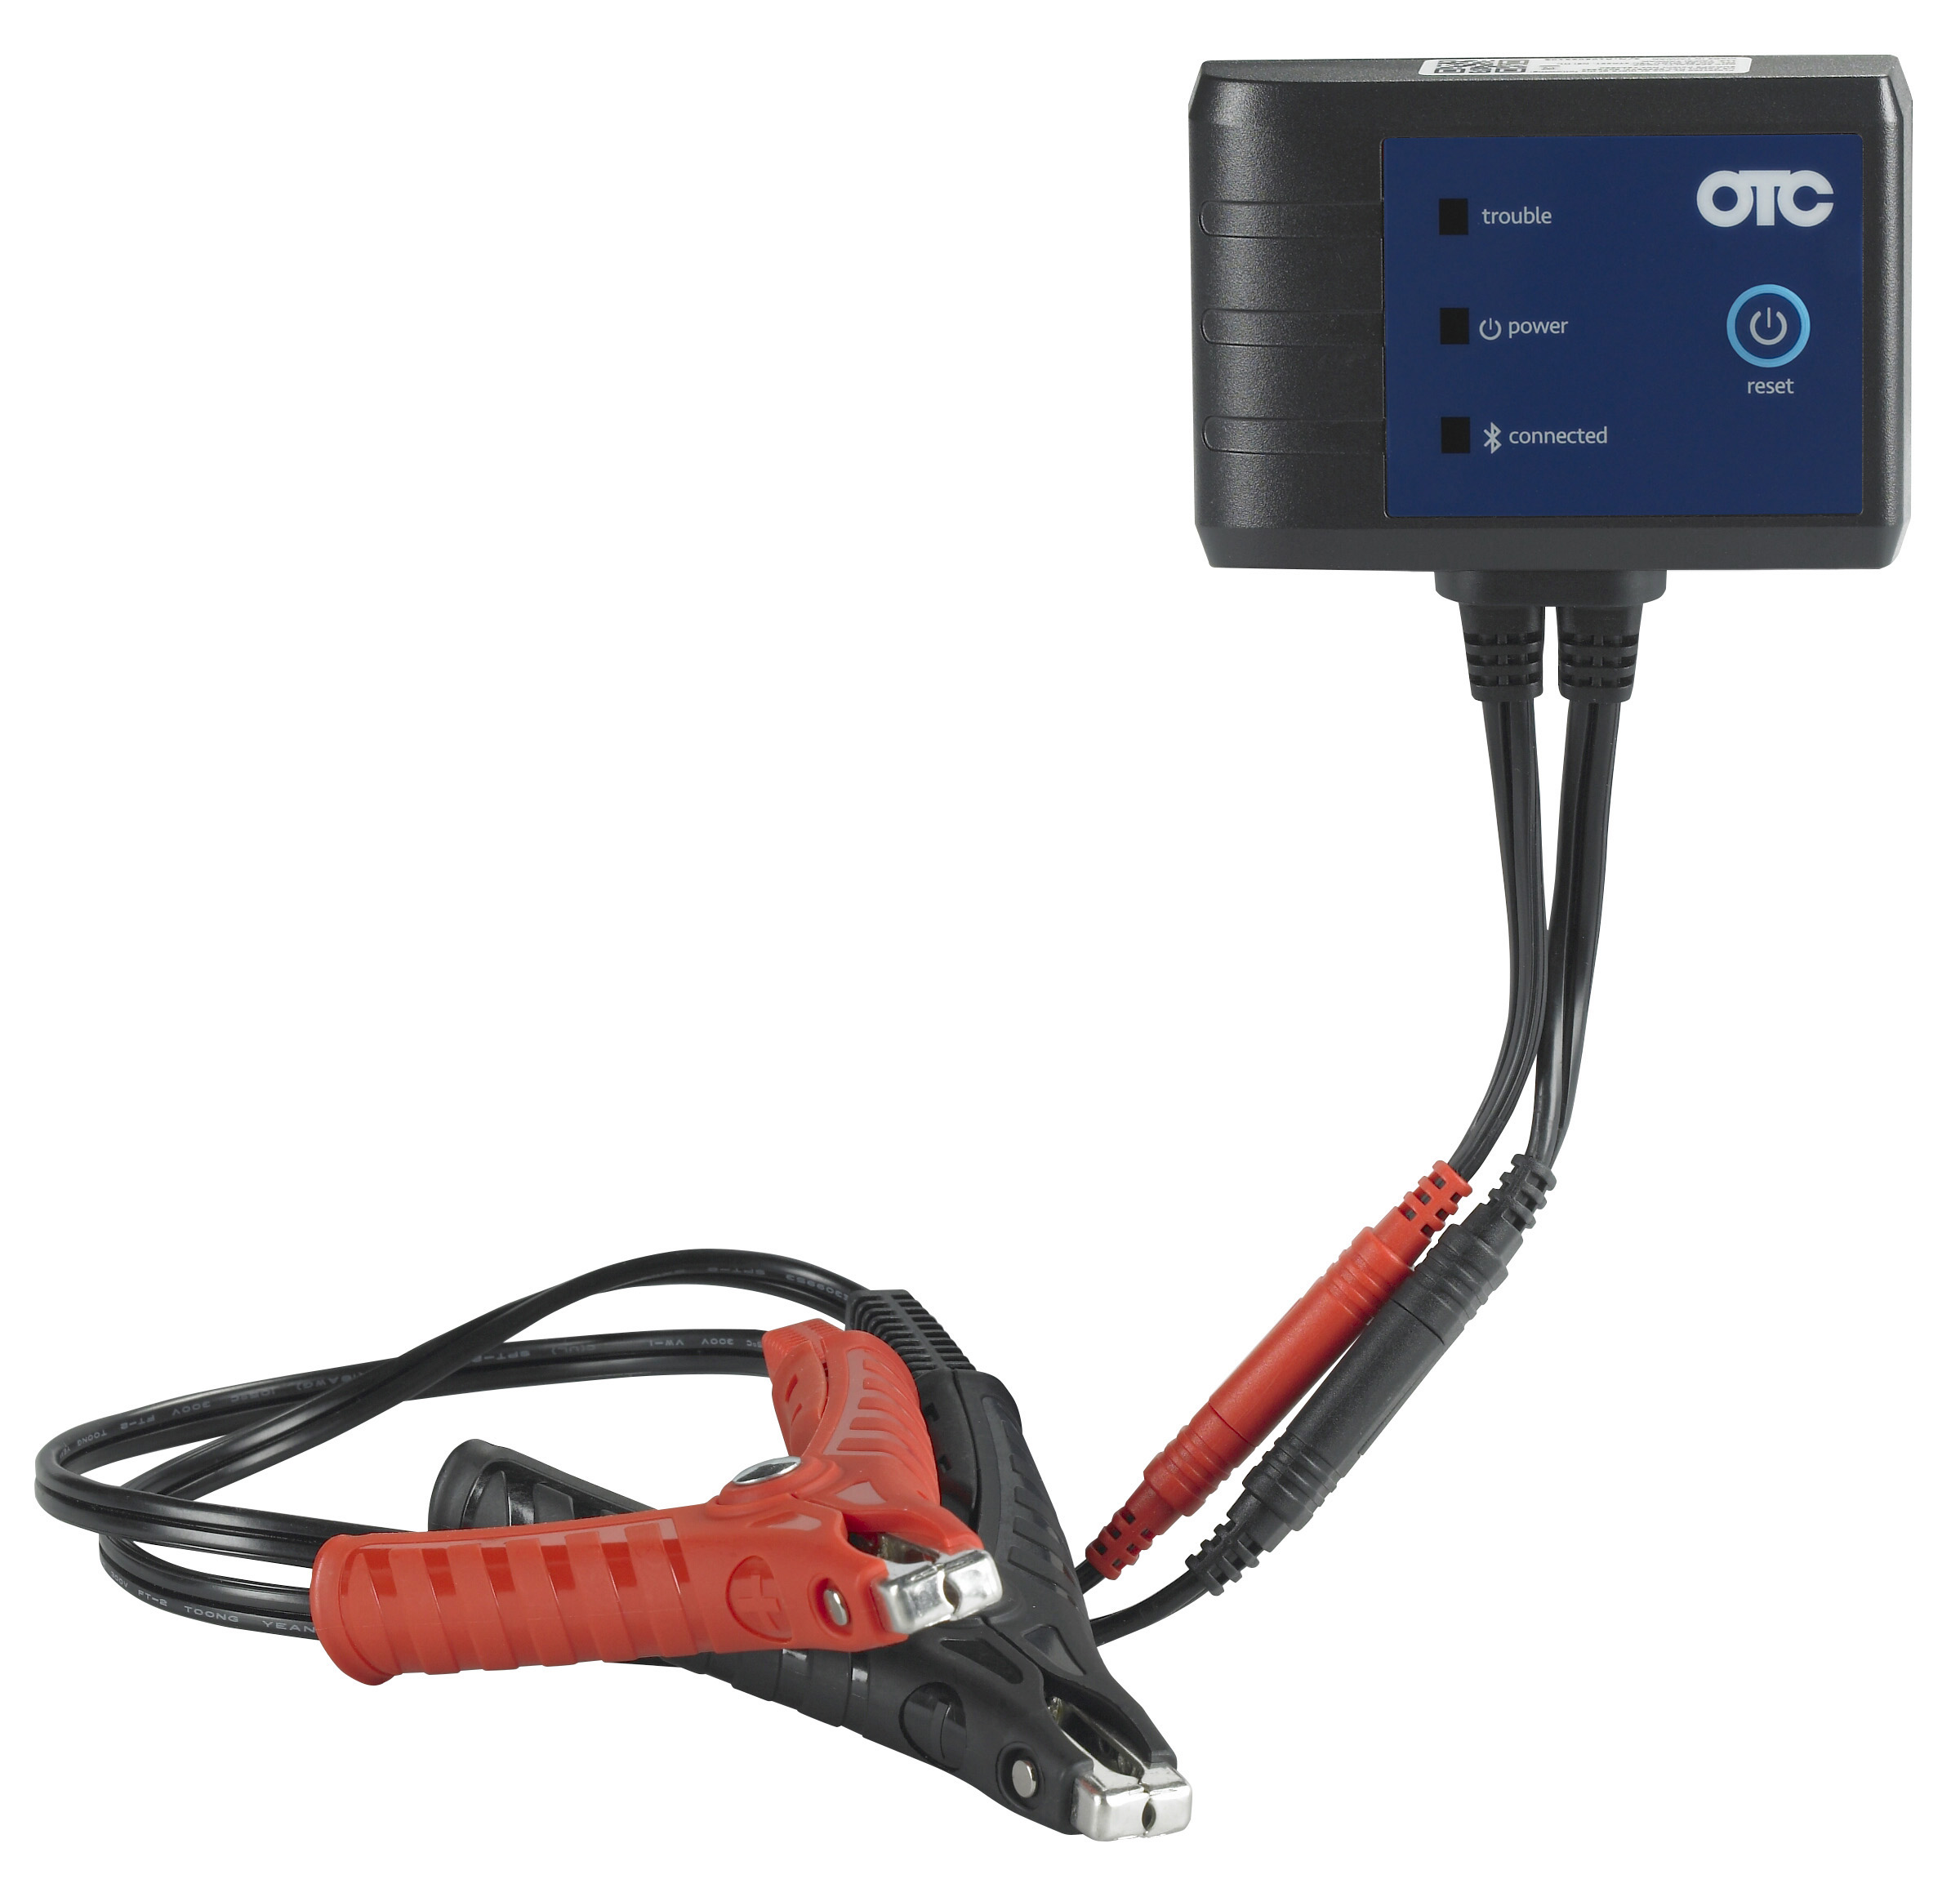 Aicevoos E8188 12V Car Battery Tester, 100-2000 CCA Automotive Alternator  Tester Digital Auto Battery Analyzer Charging Cranking System Tester for  Car